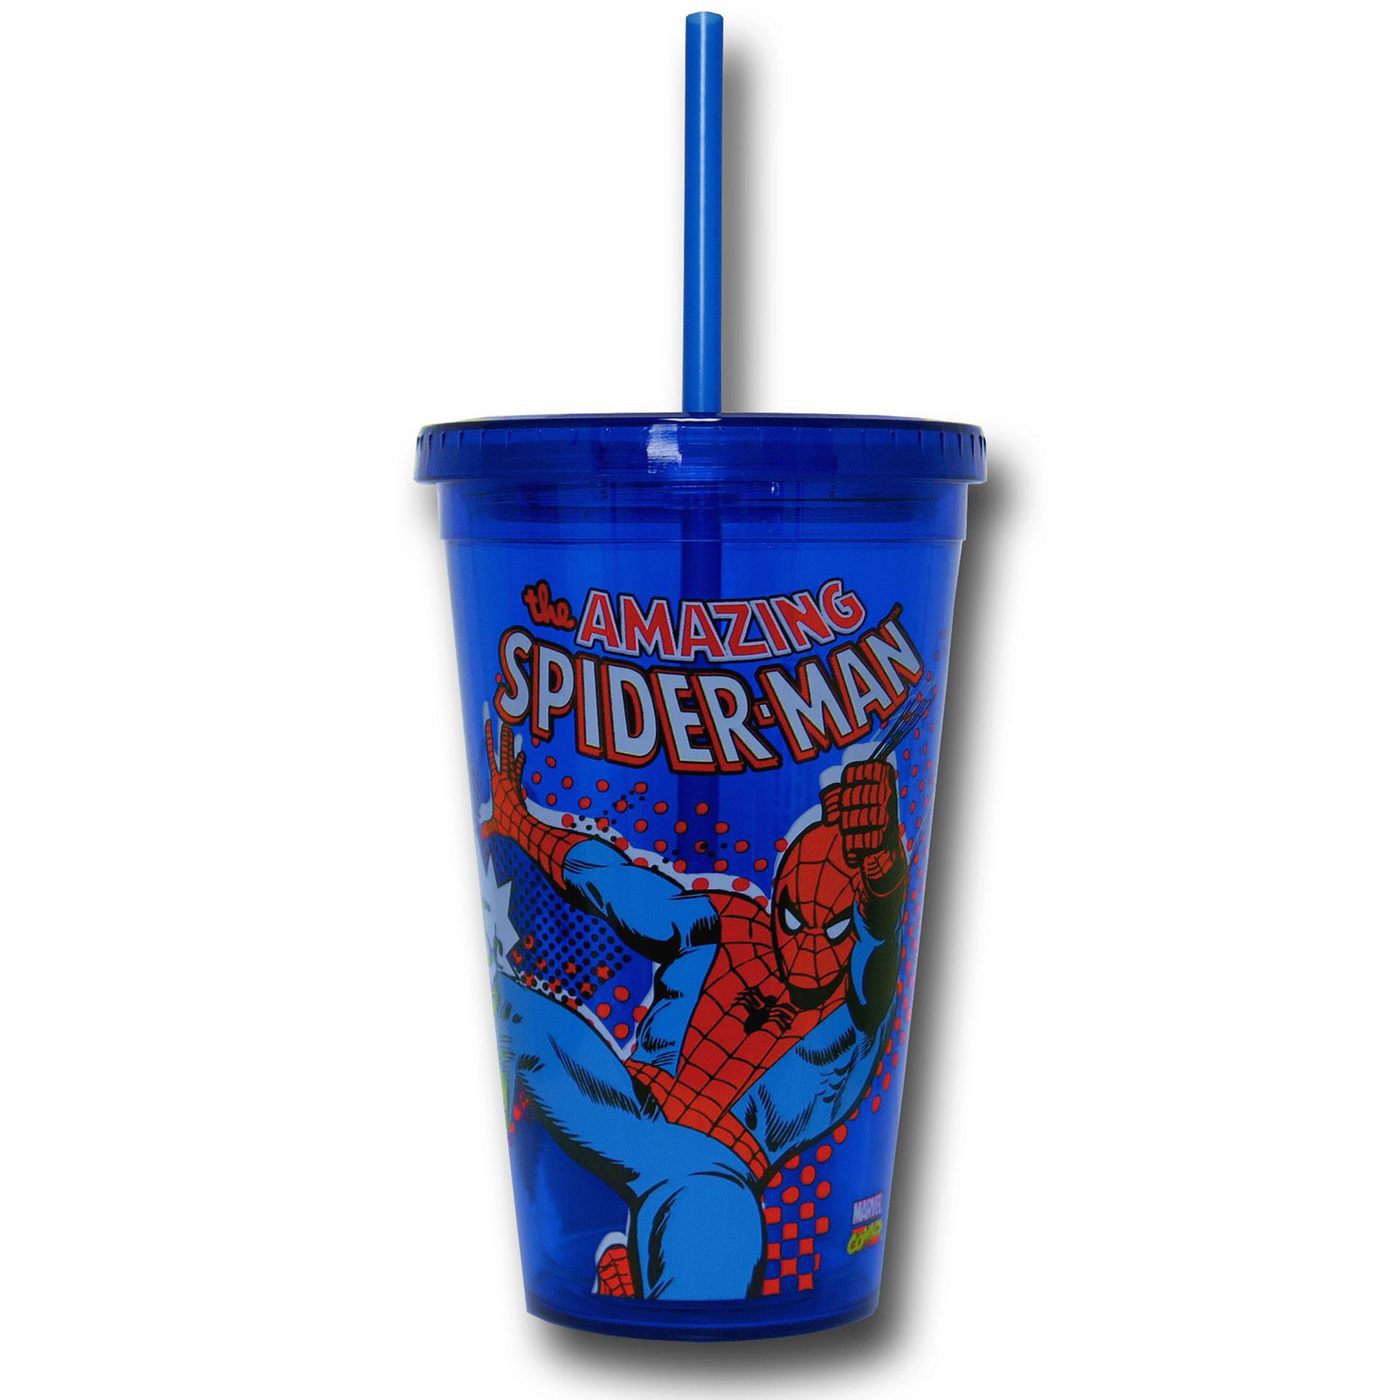 Spiderman Action 16oz Acrylic Cold Cup